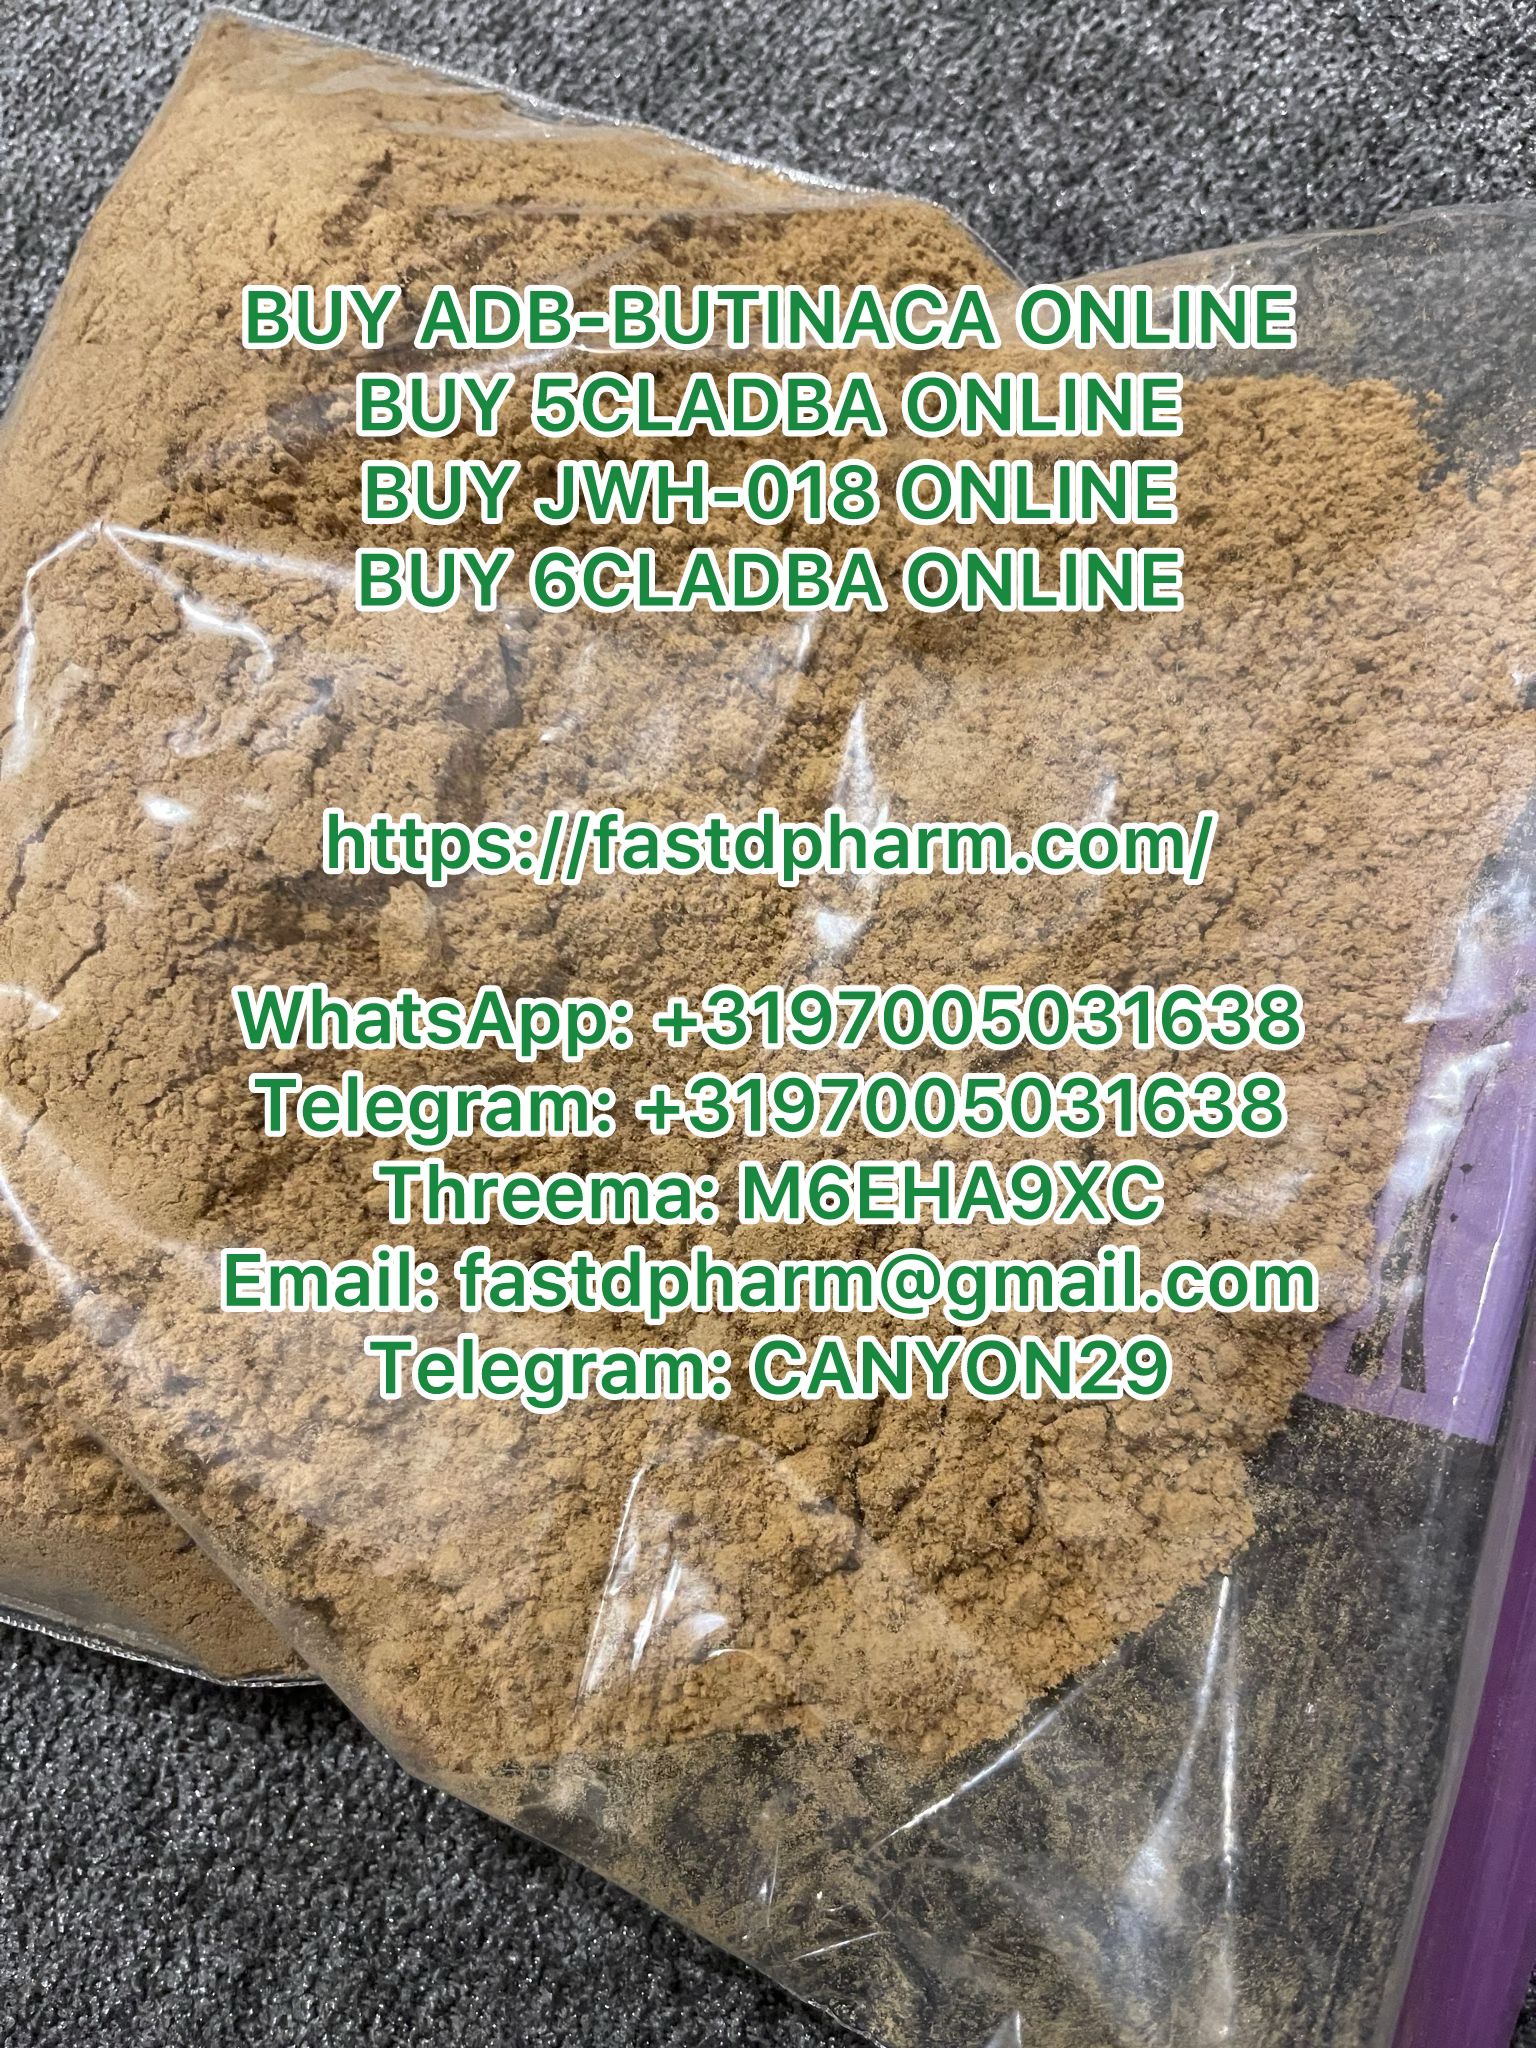 6cladba-for-sale-online-telegram-canyon29-buy-6cladba-online-purchase-6cladba-online-where-to-buy-6cladba-online-order-6cladba-online--113358